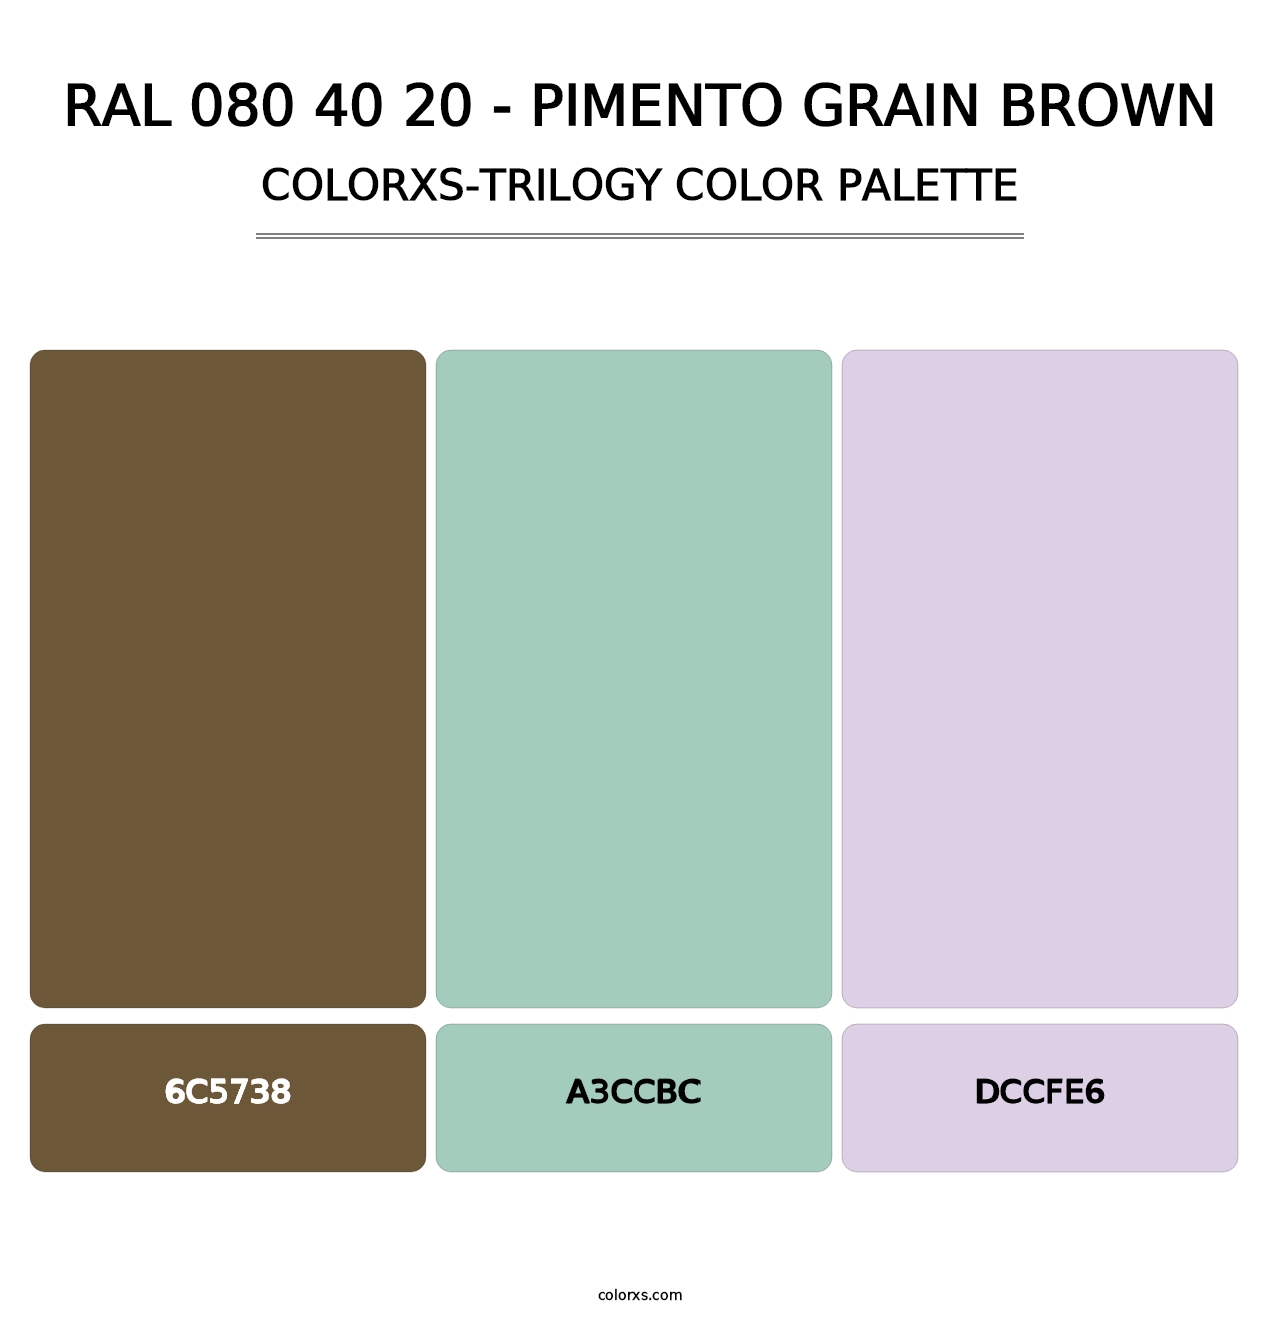 RAL 080 40 20 - Pimento Grain Brown - Colorxs Trilogy Palette